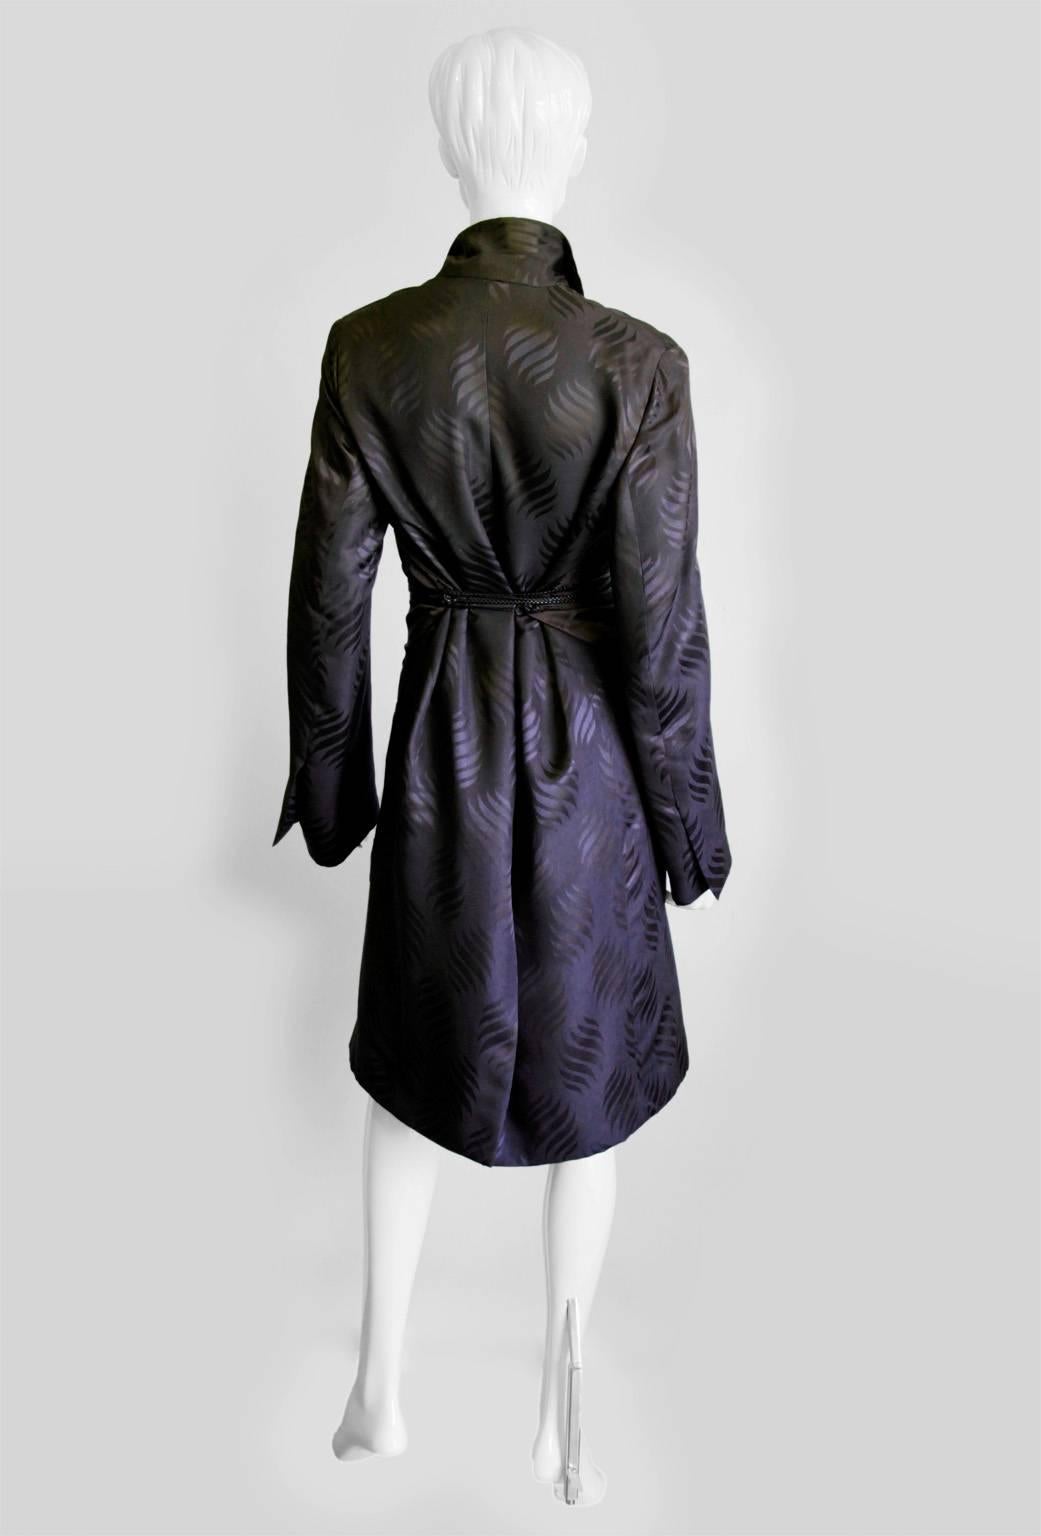 Black Free Shipping: Iconic Tom Ford Gucci FW 2002 Silk Kimono Coat, Obi & Skirt! 38